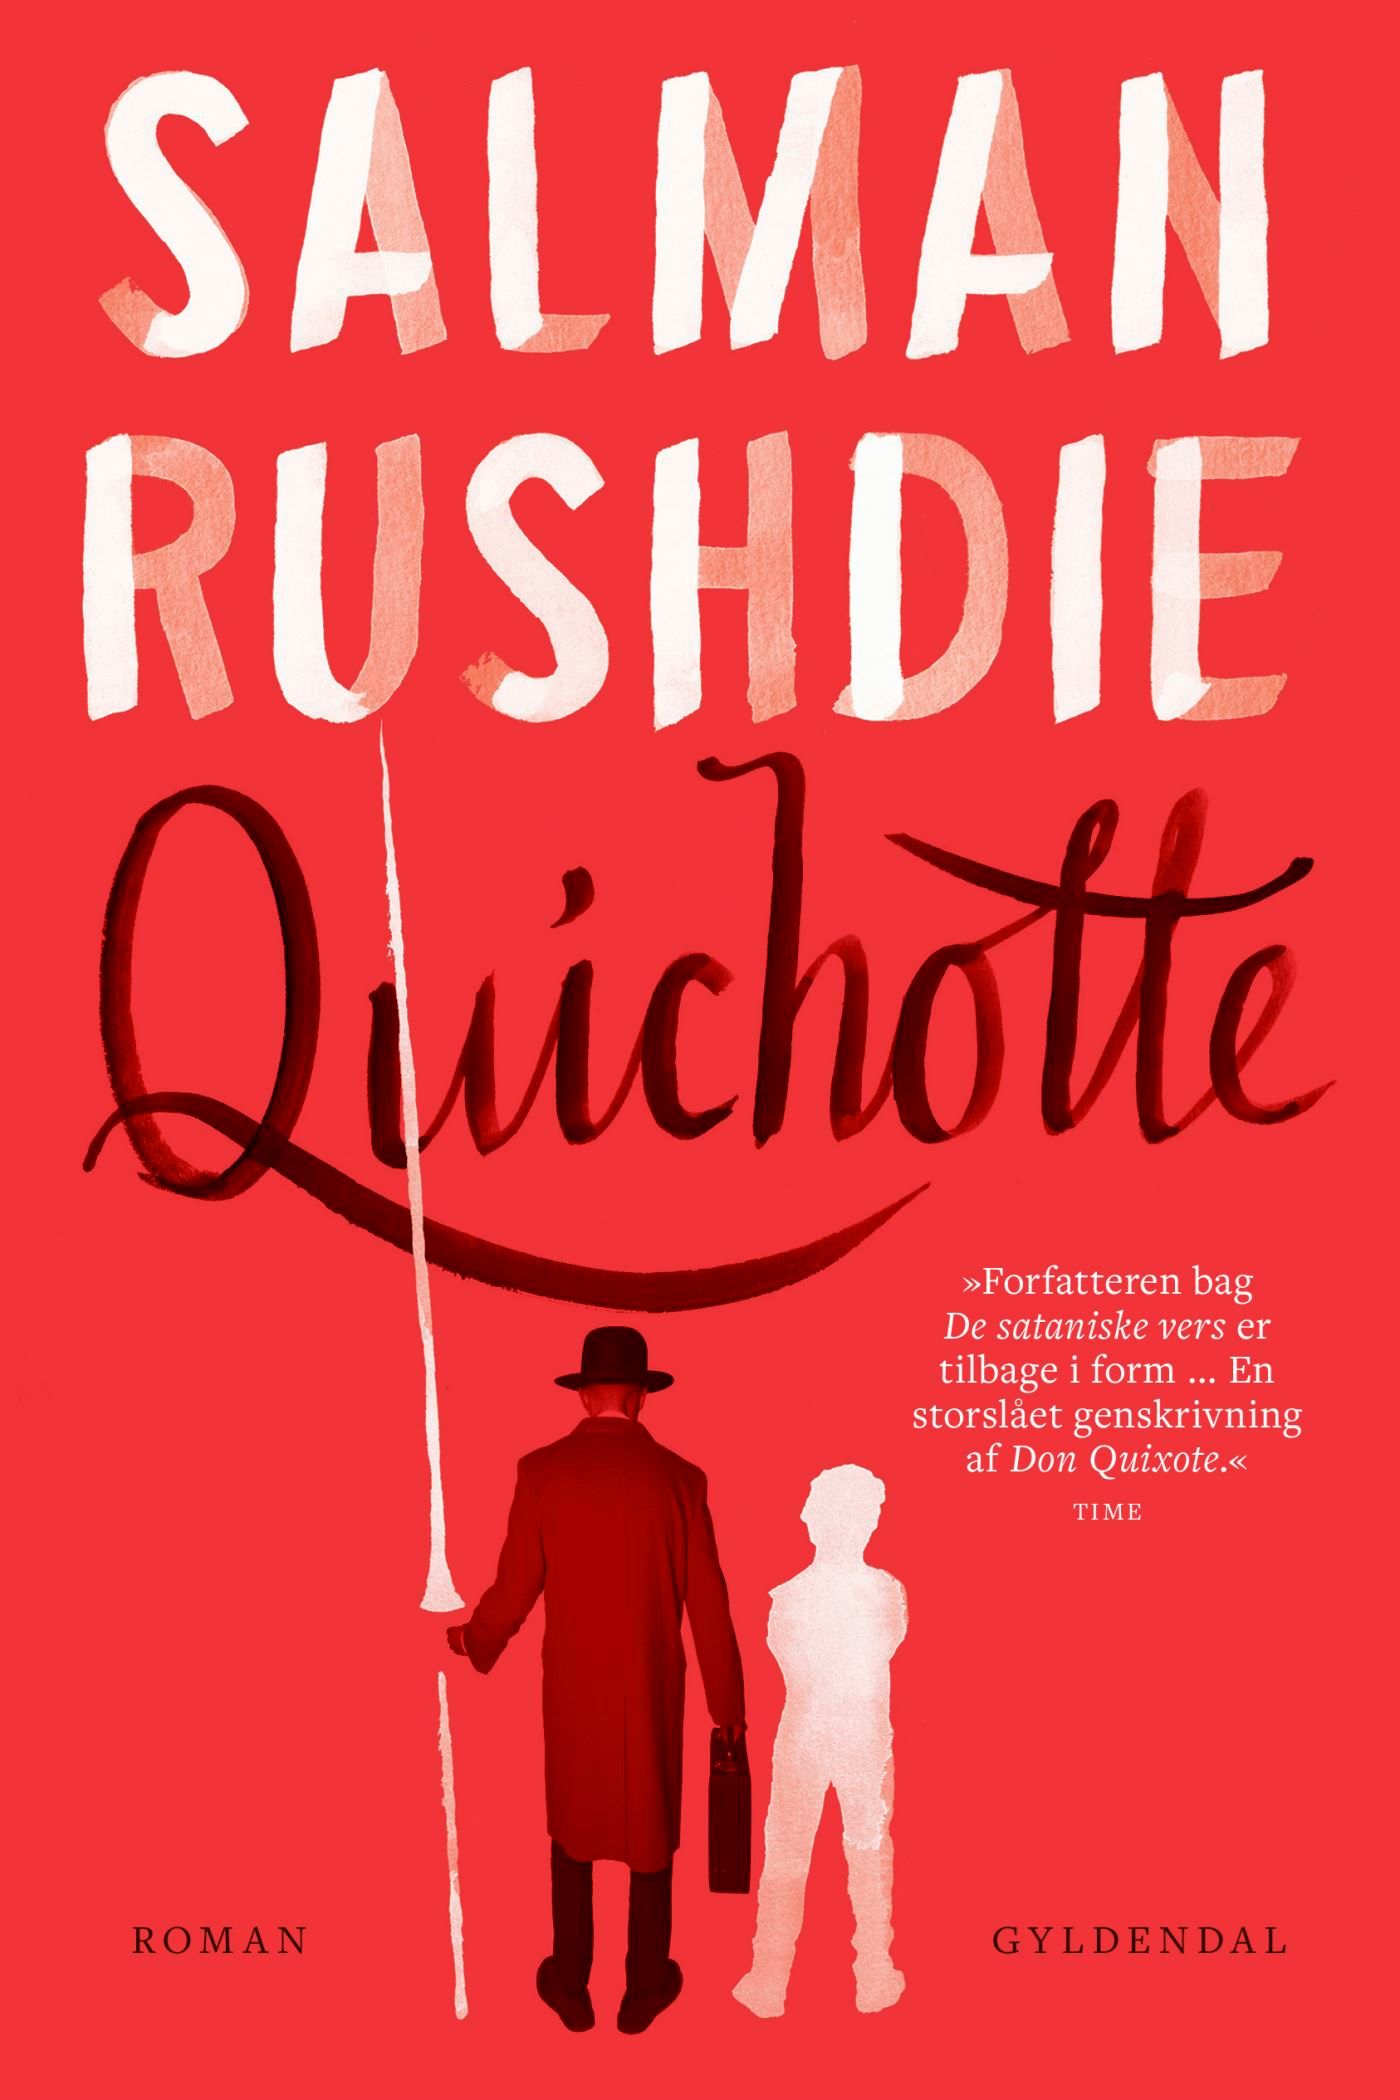 Quichotte, eBook by Salman Rushdie